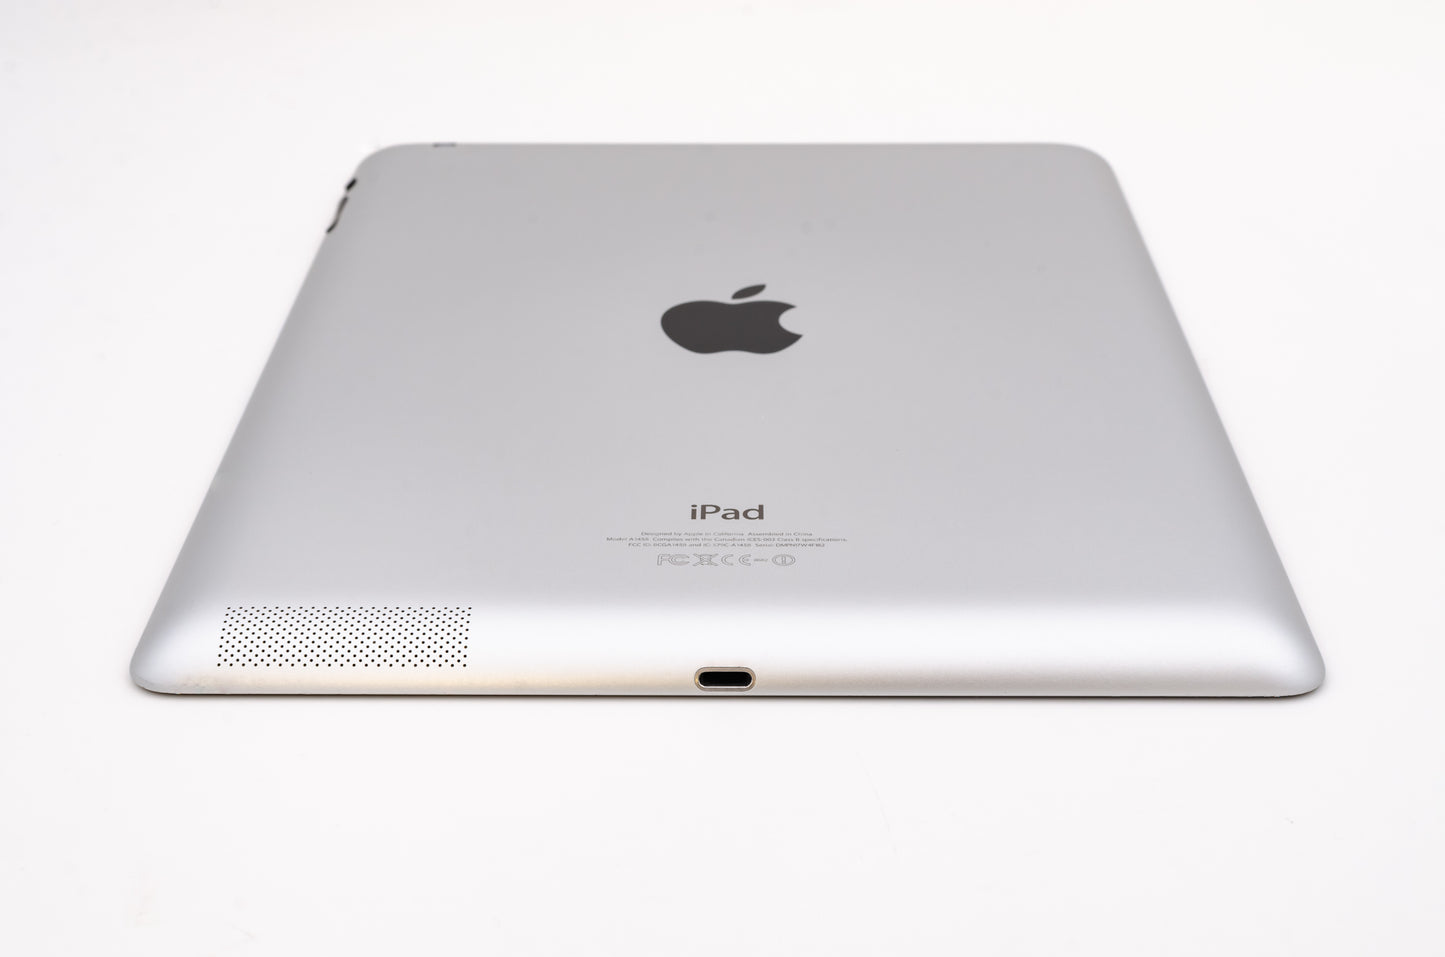 apple-2012-9.7-inch-ipad-4-a1458-silver/white-5